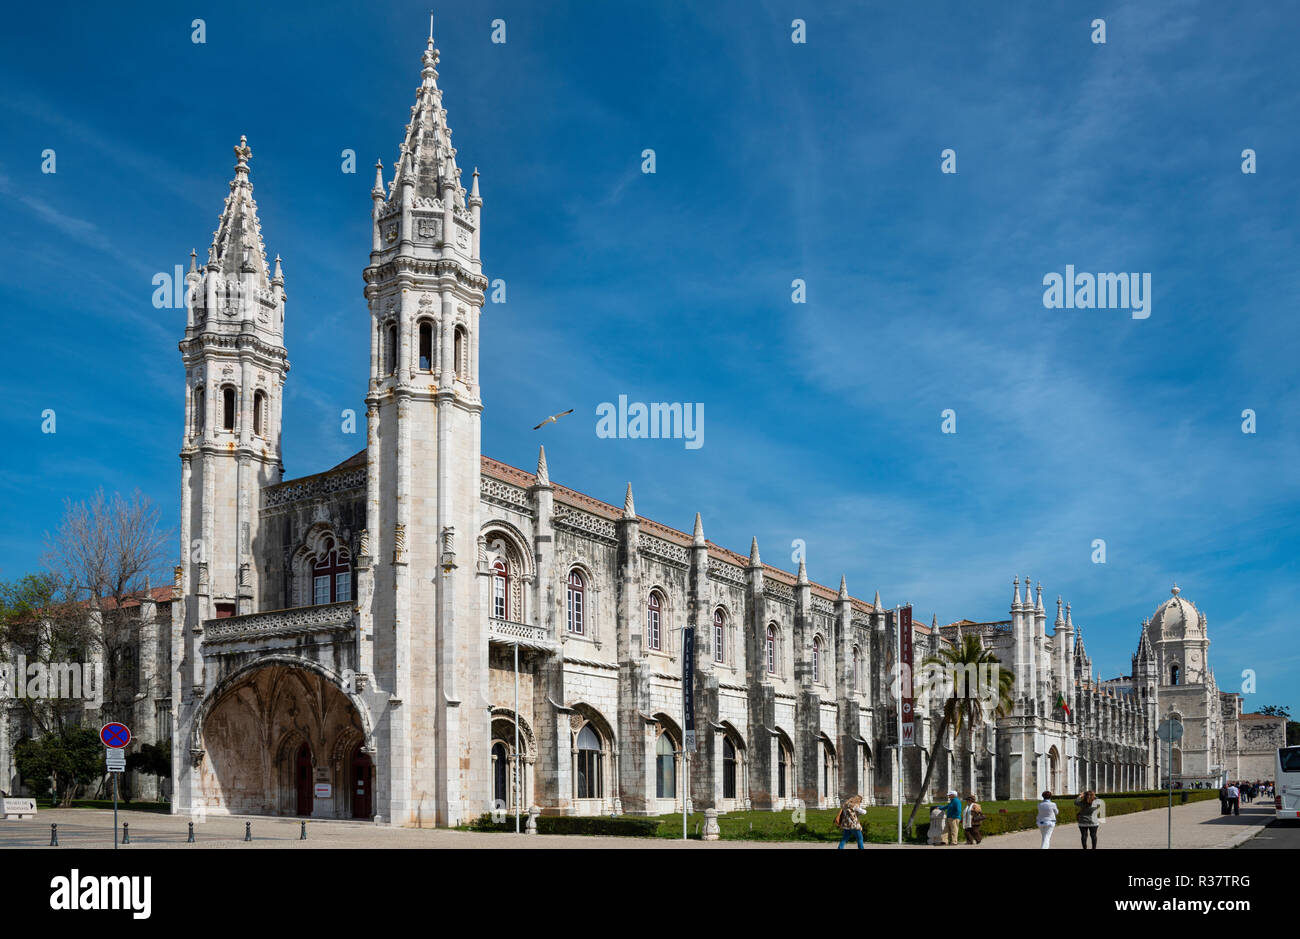 Mosteiro dos Jerónimos, Hieronymus Monastery, Belém, Lisbon, Lisbon District, Portugal Stock Photo